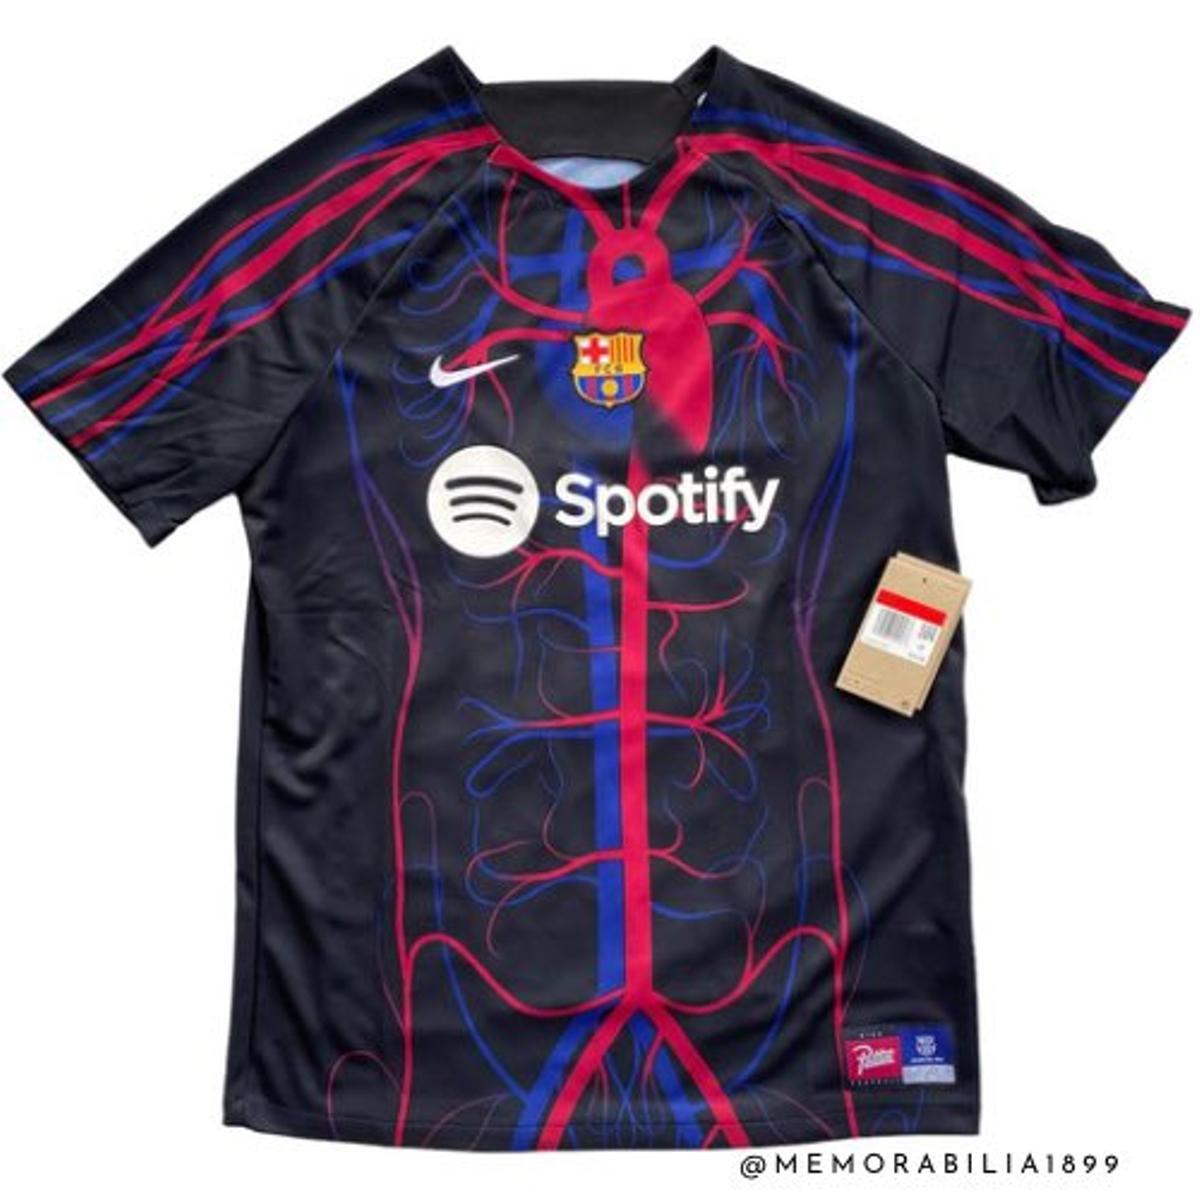 Nueva camiseta del Barcelona / Barça.